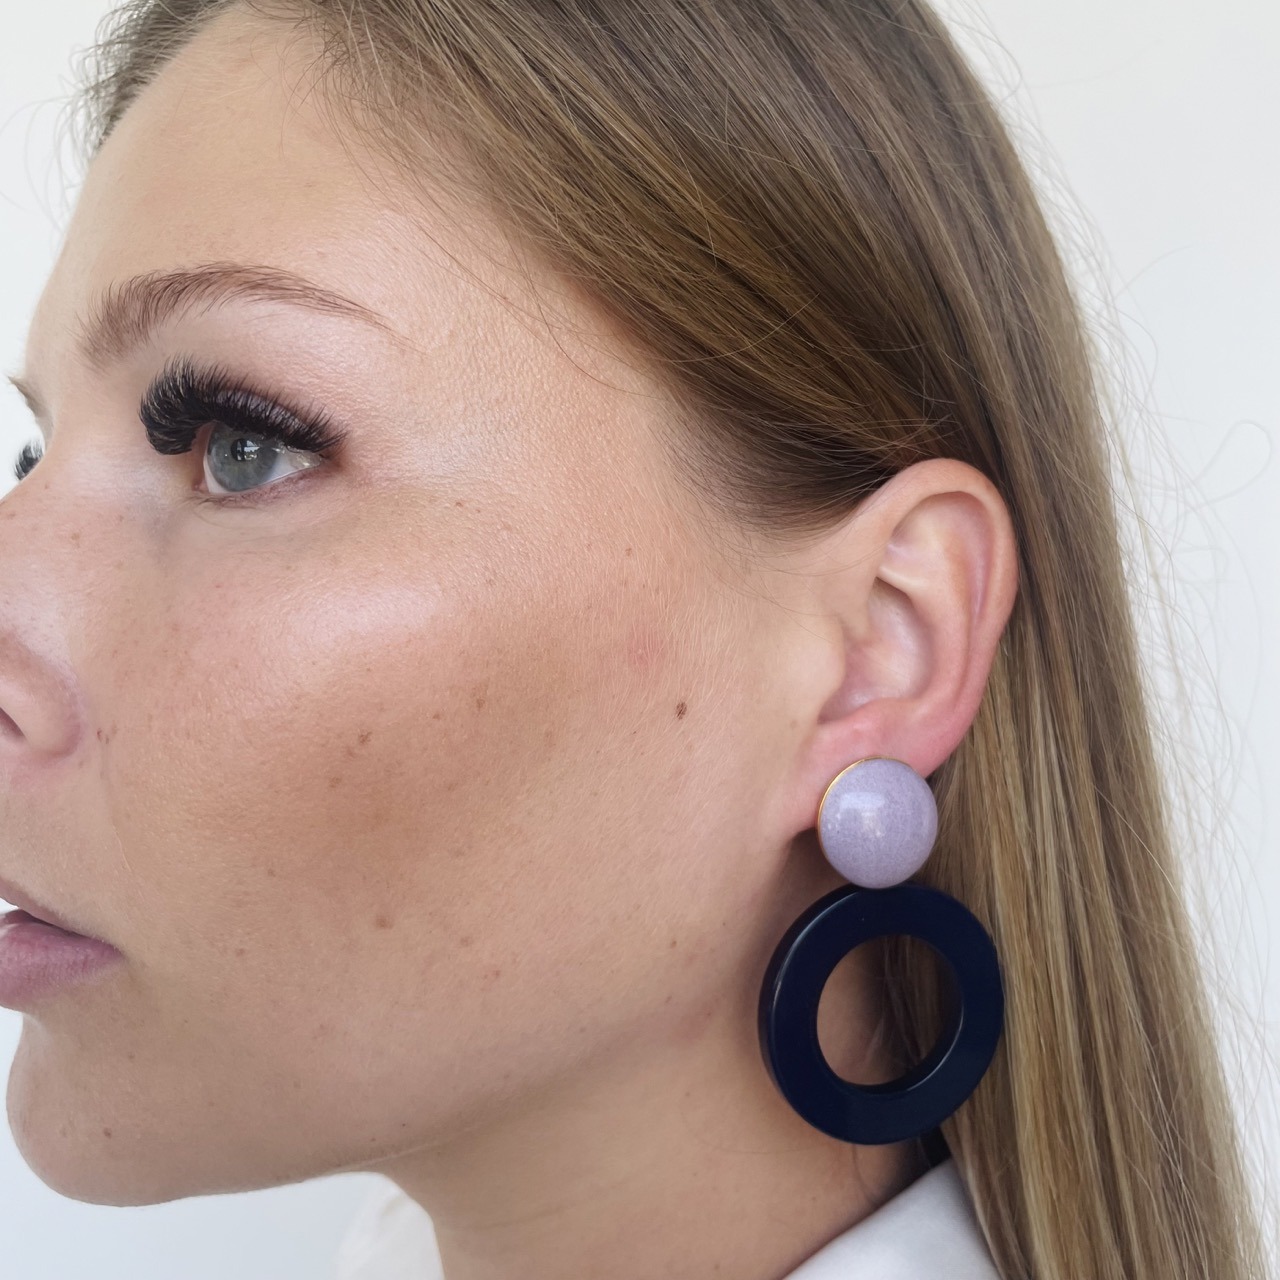 Double circle purple earring